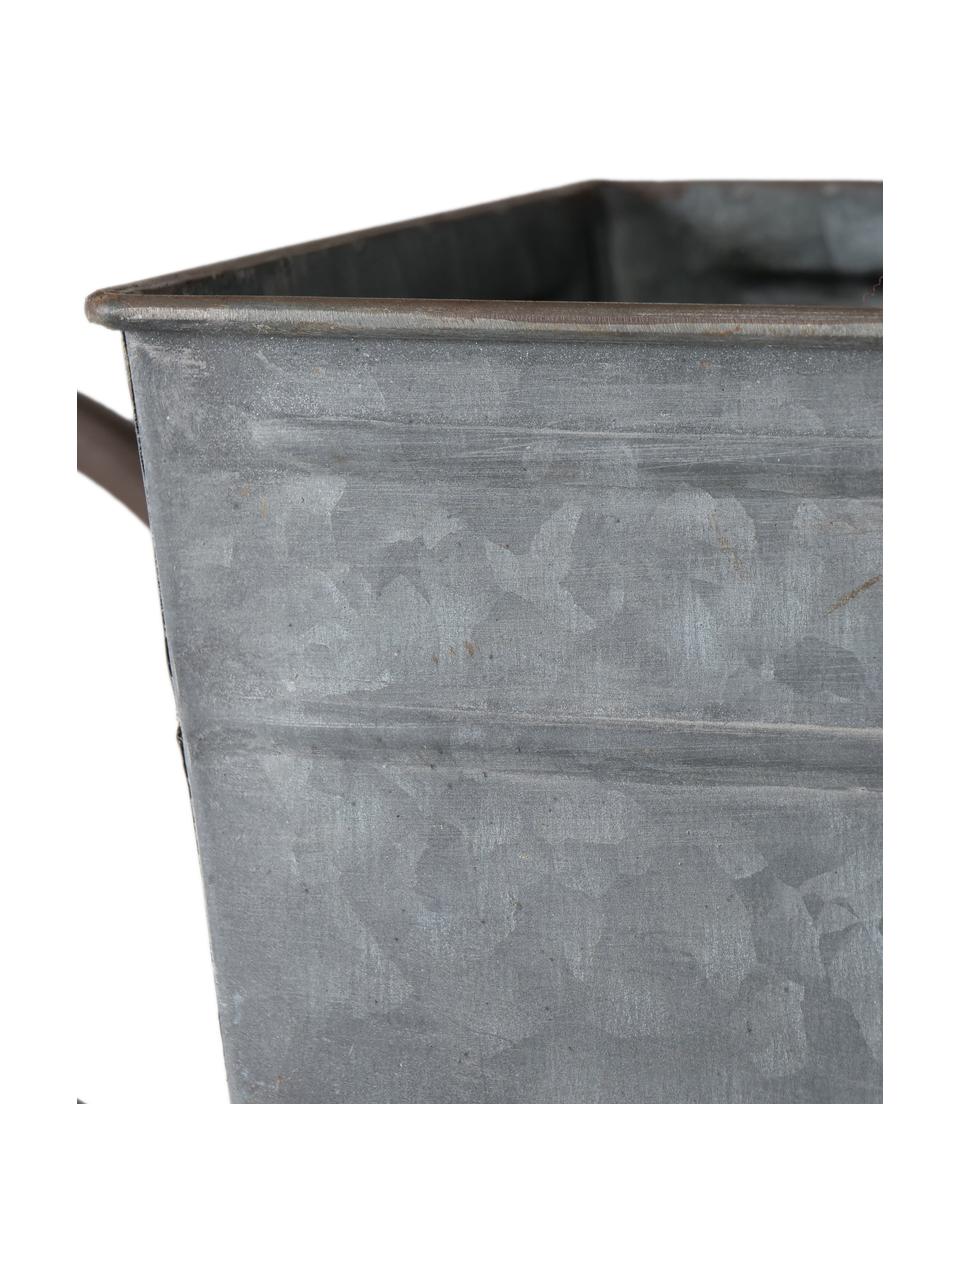 Carriola portavaso Marusa, Metallo zincato, Zinco, Larg. 54 x Alt. 21 cm